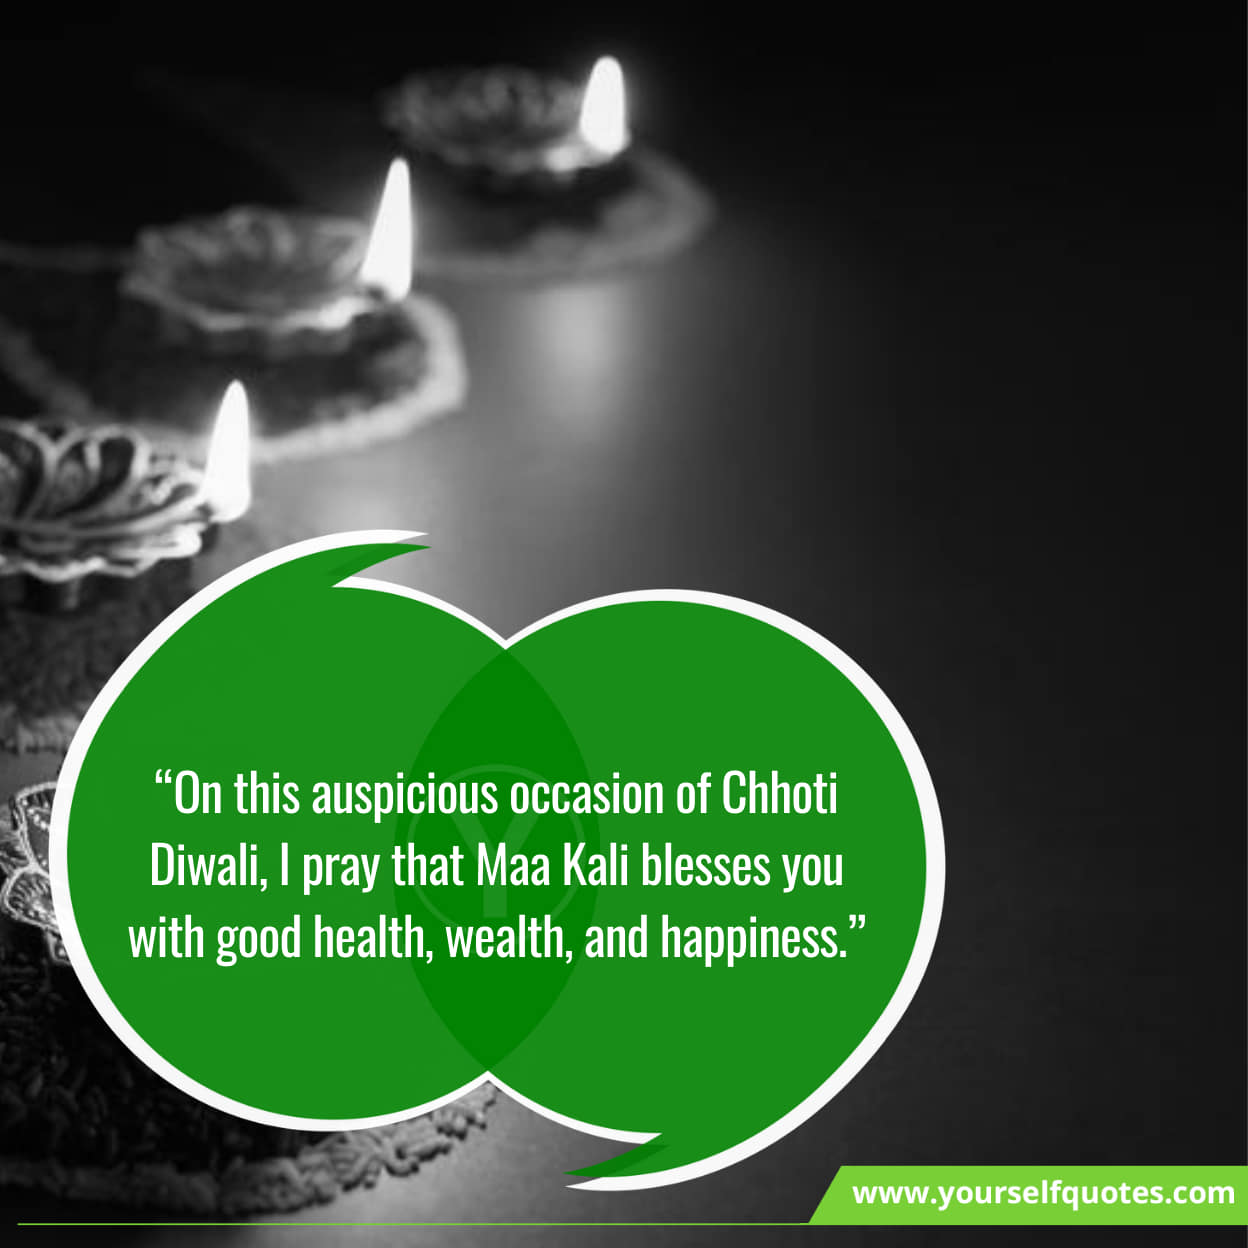 Quotes On Chhoti Diwali